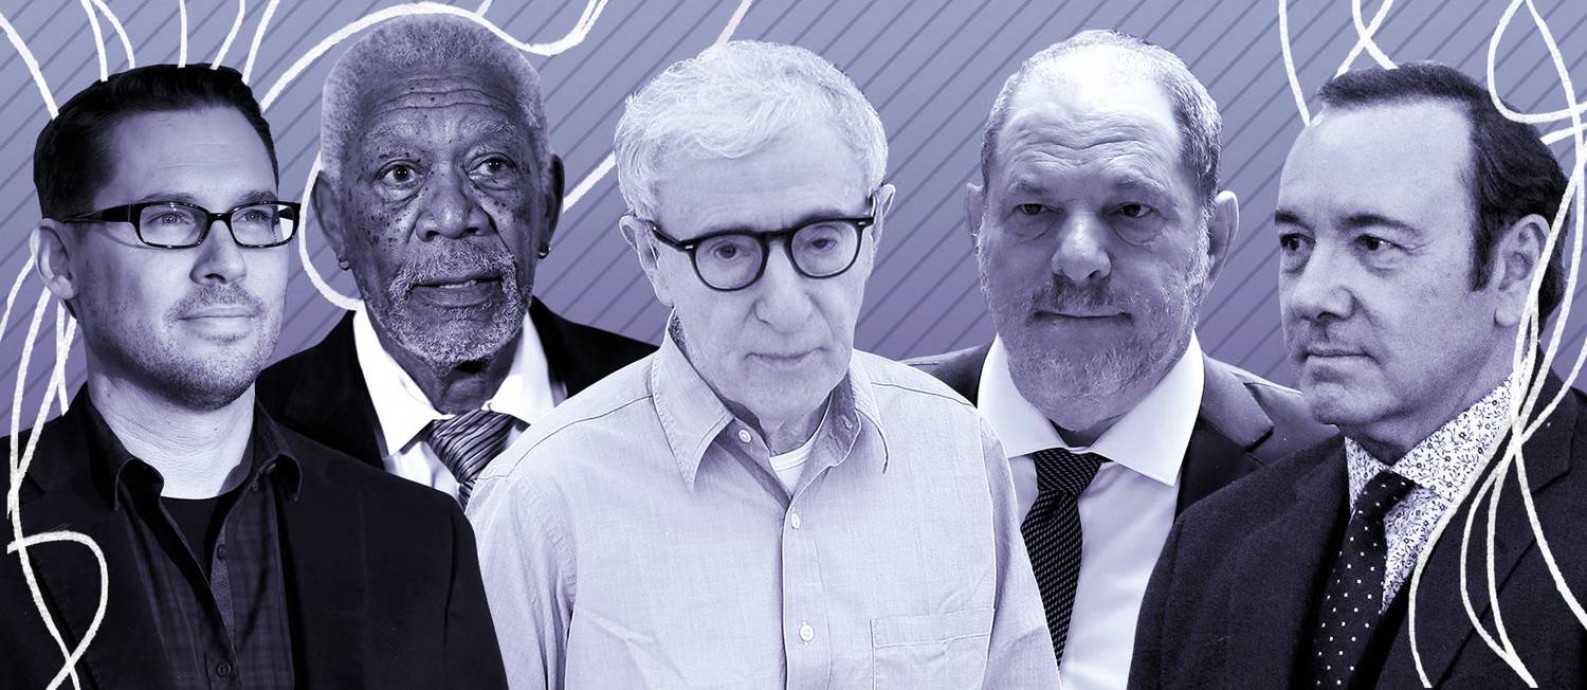 Bryan Singer, Morgan Freeman, Woody Allen, Harvey Weinstein e Kevin Spacey: alguns dos medalhões de Hollywood que entraram na mira do MeToo Foto: Arte O Globo